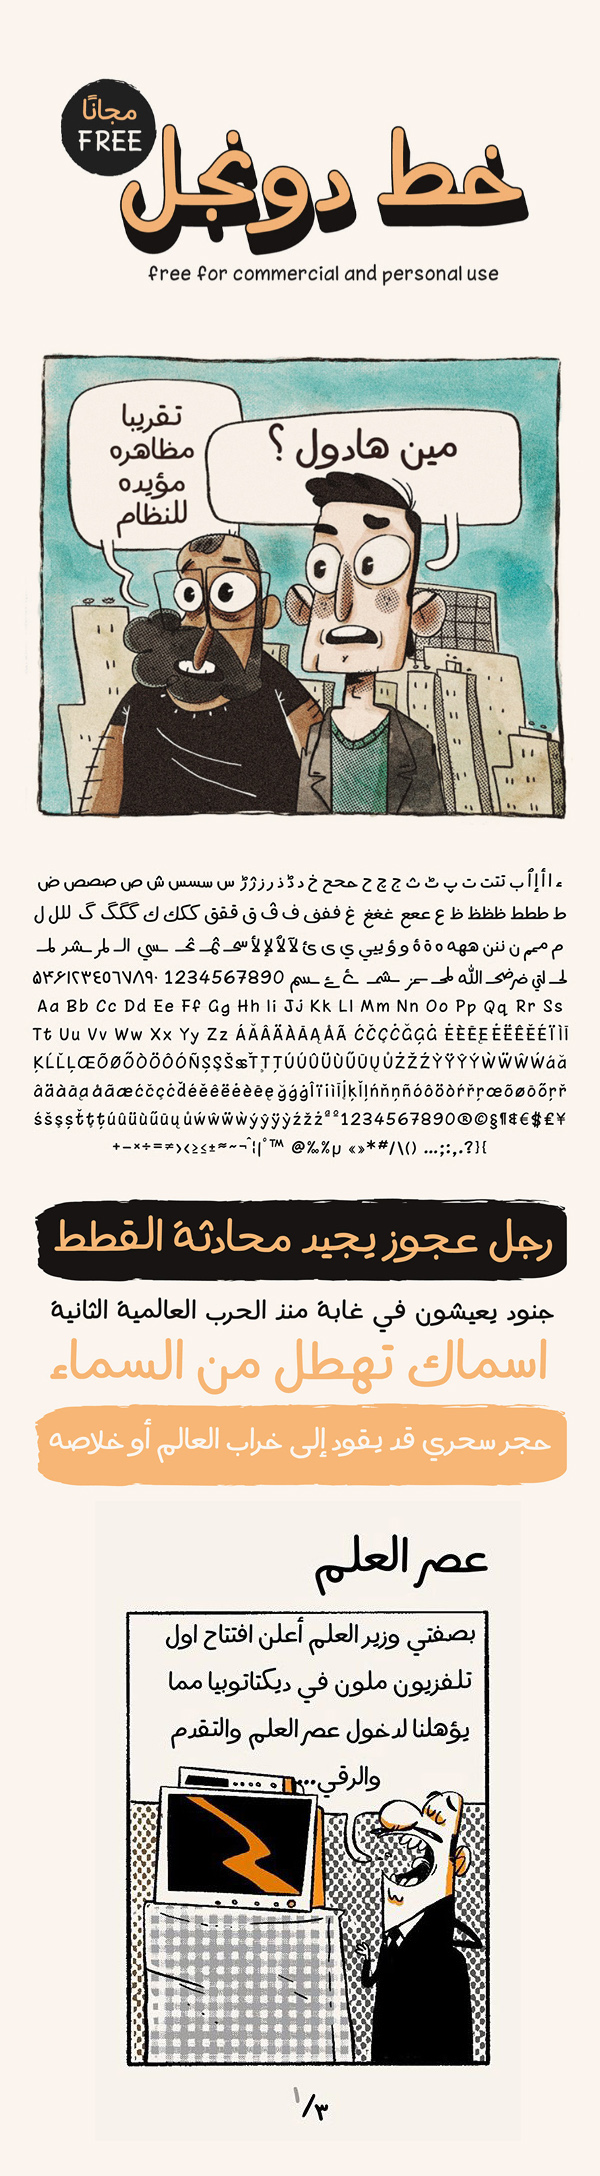 Dongol Arabic Hand-Drawn Free Font